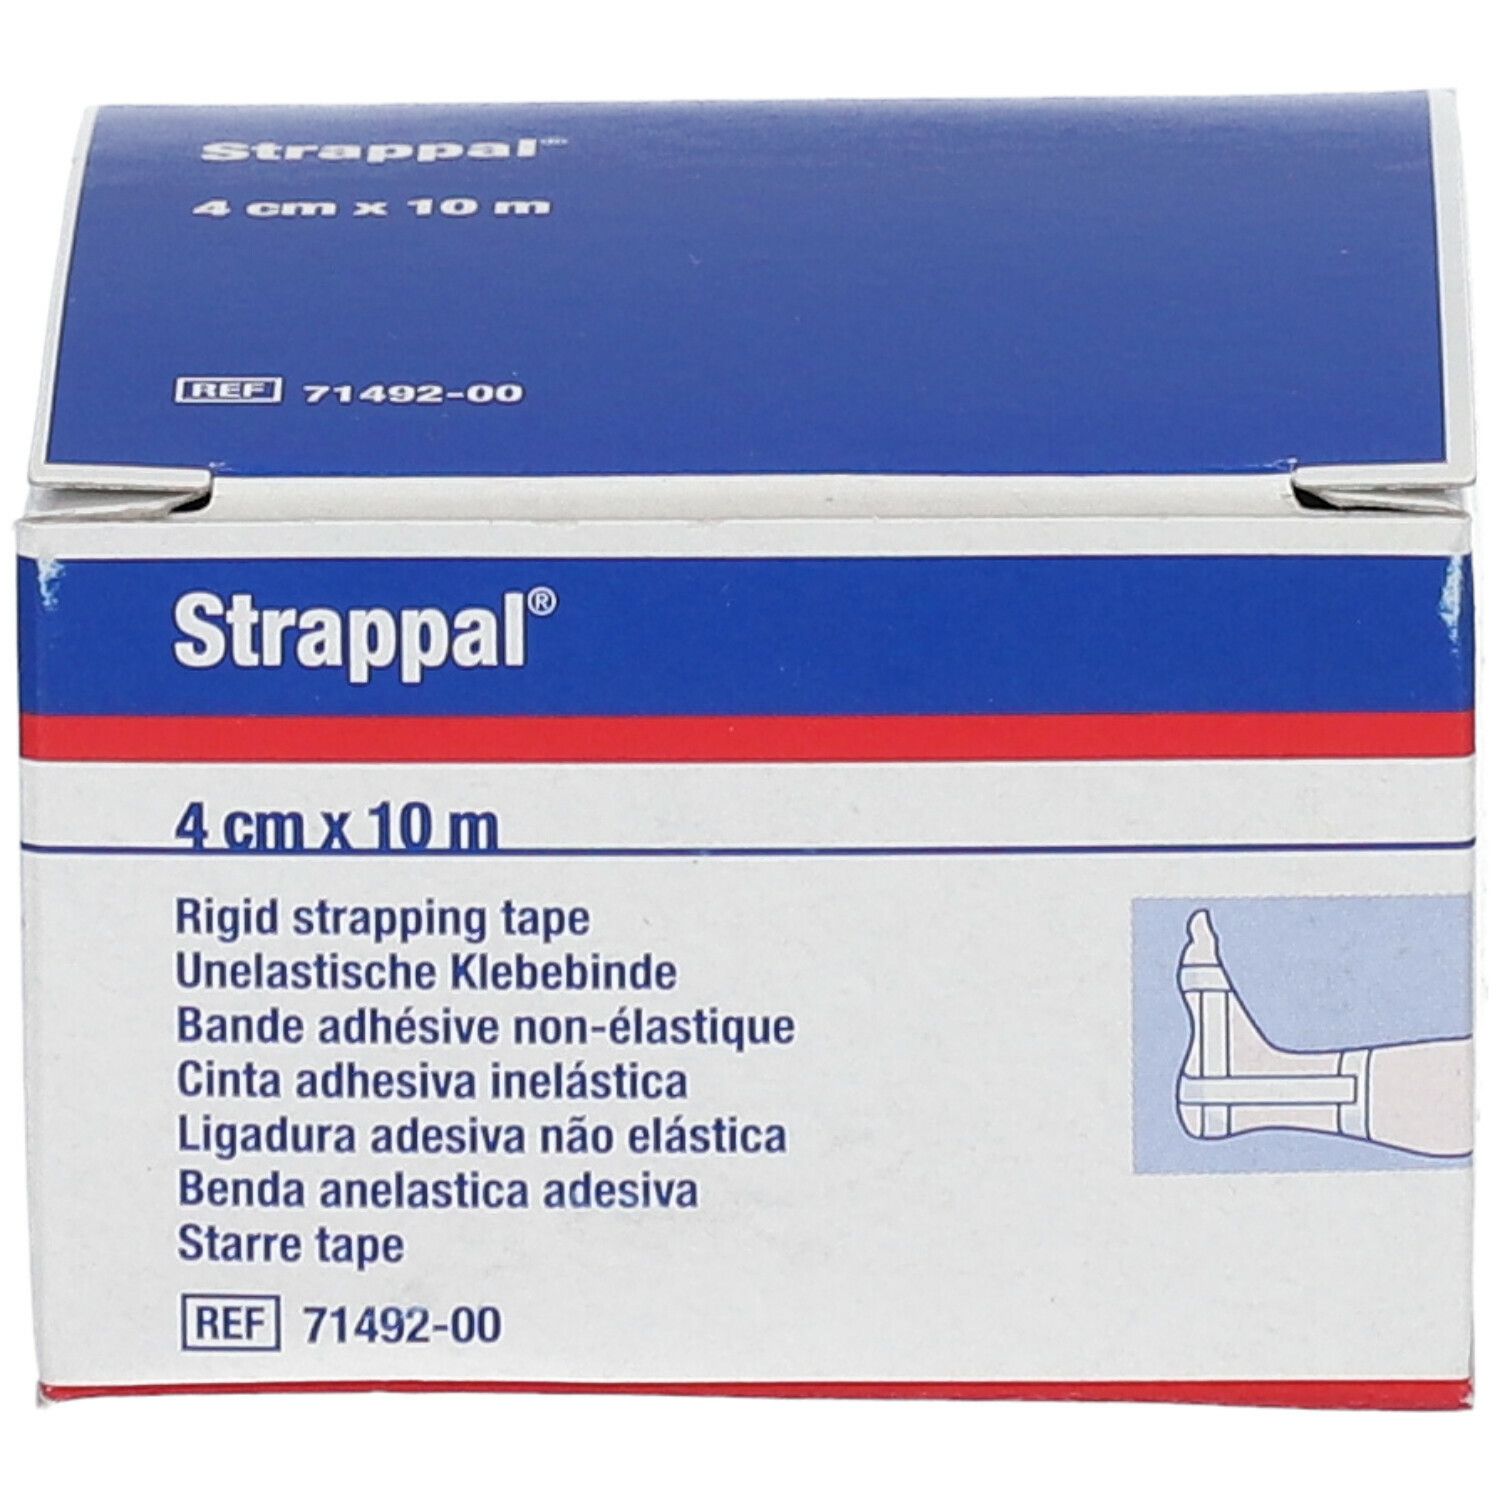 Strappal® Indvidual Benda anelastica adesiva 4 cm x 10 m